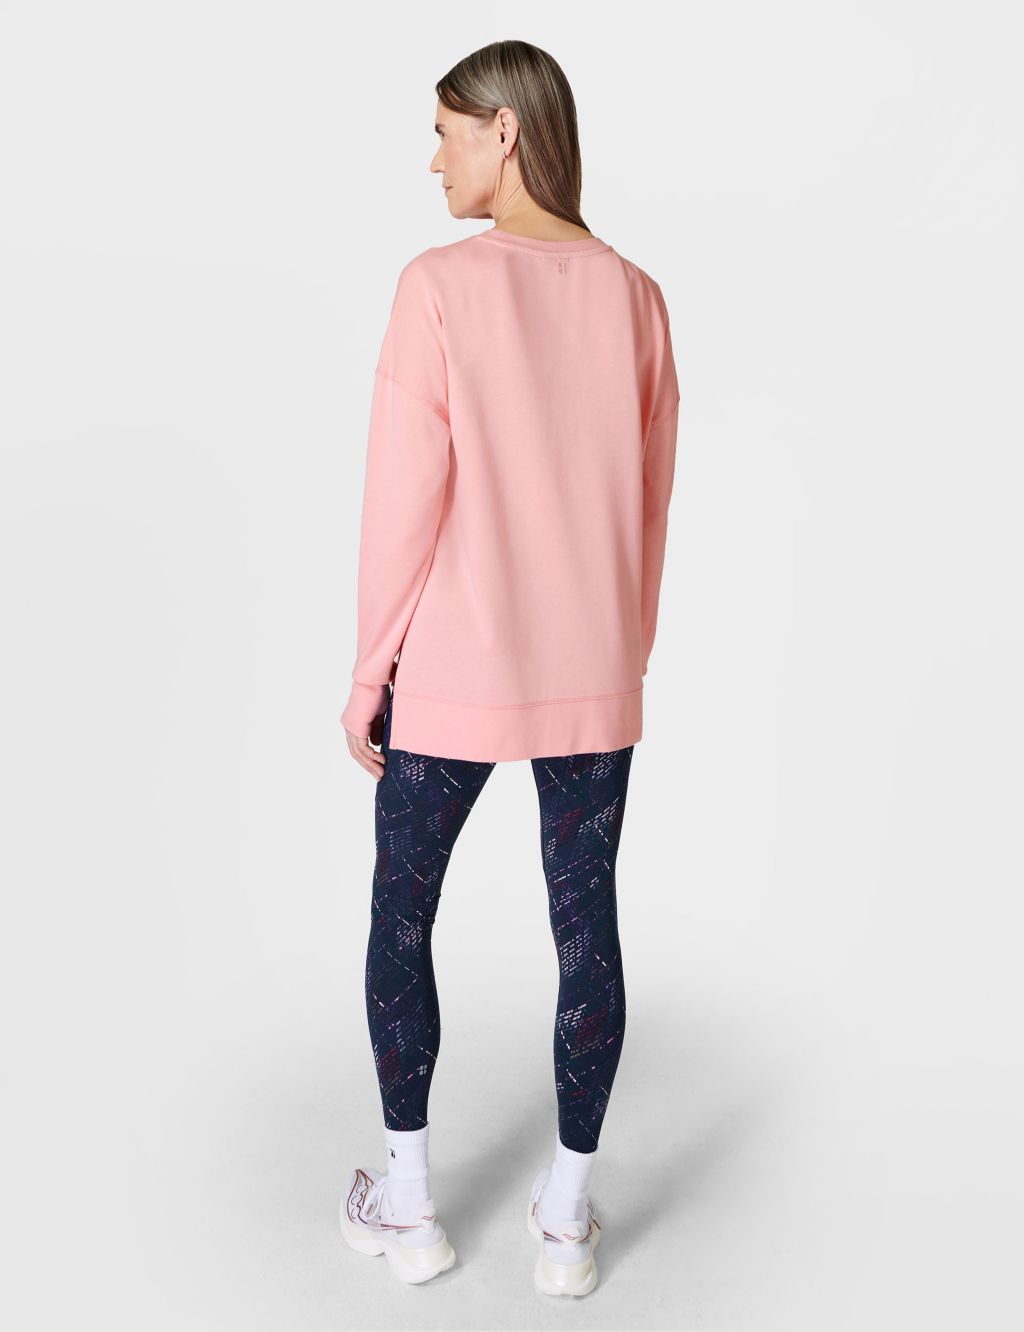 After Class Cotton Blend Longline Sweatshirt image 3